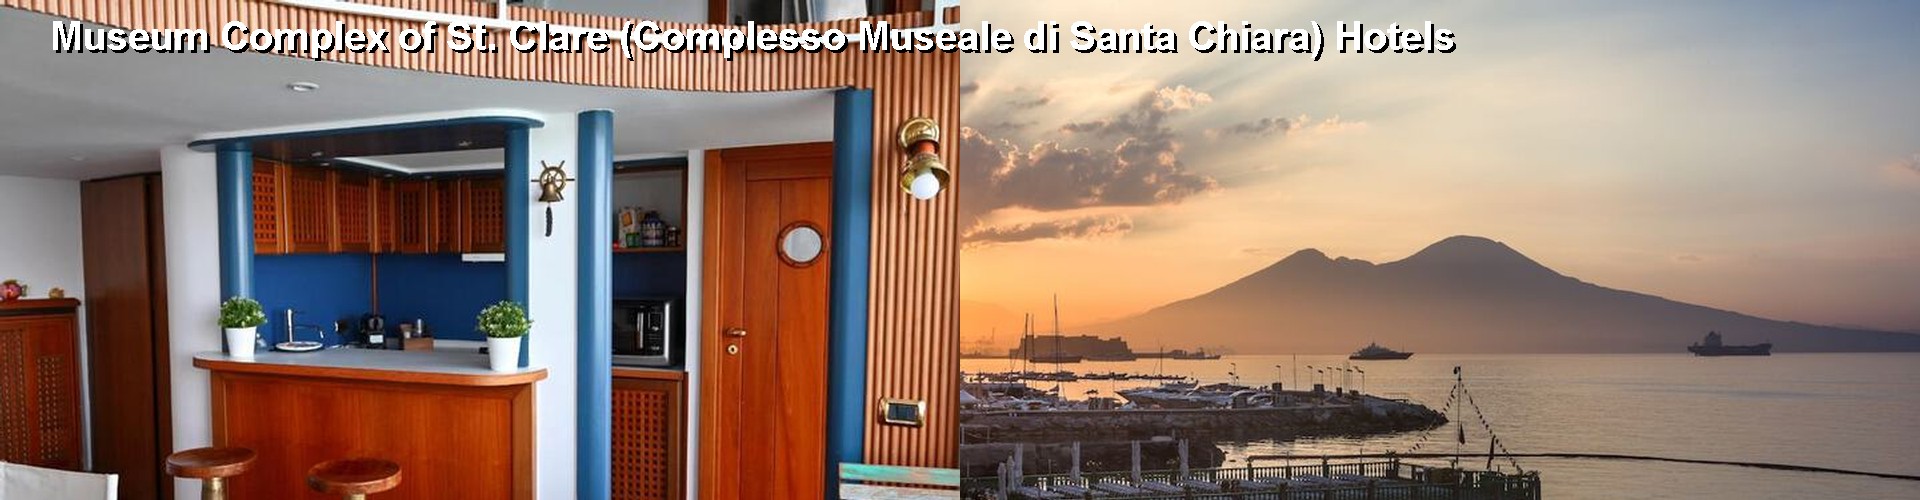 5 Best Hotels near Museum Complex of St. Clare (Complesso Museale di Santa Chiara)